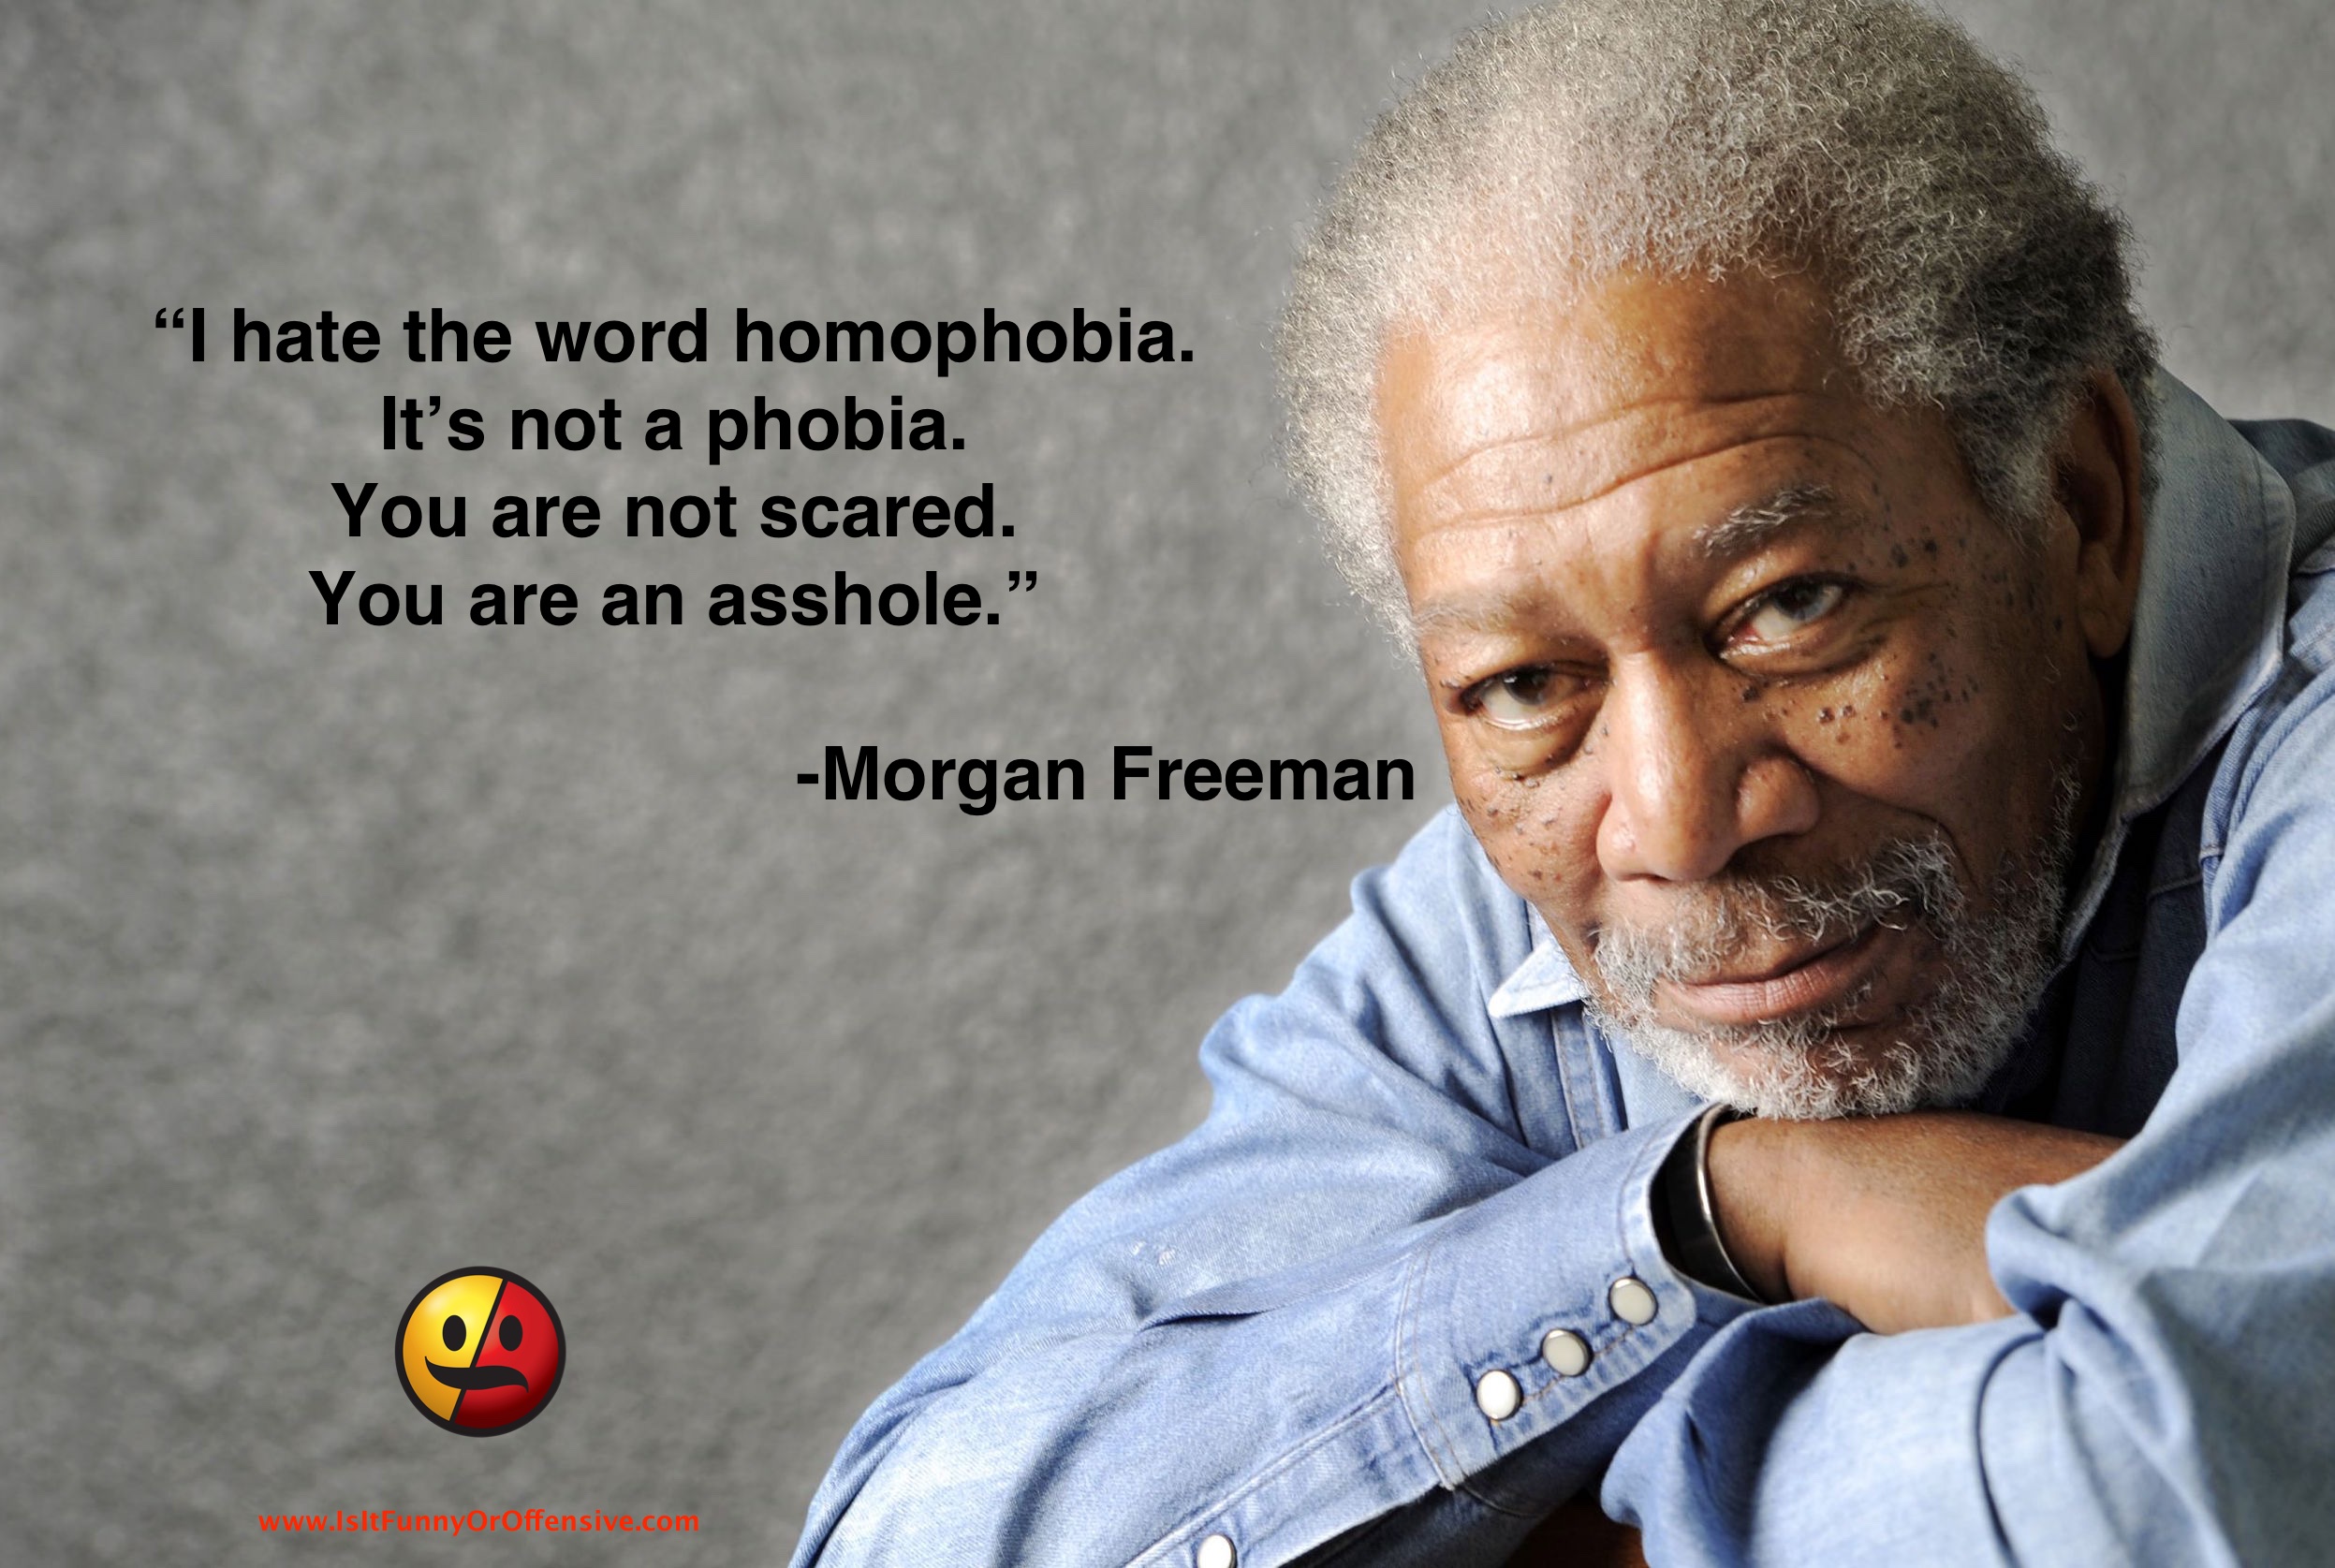 Morgan Freeman on Homophobia.